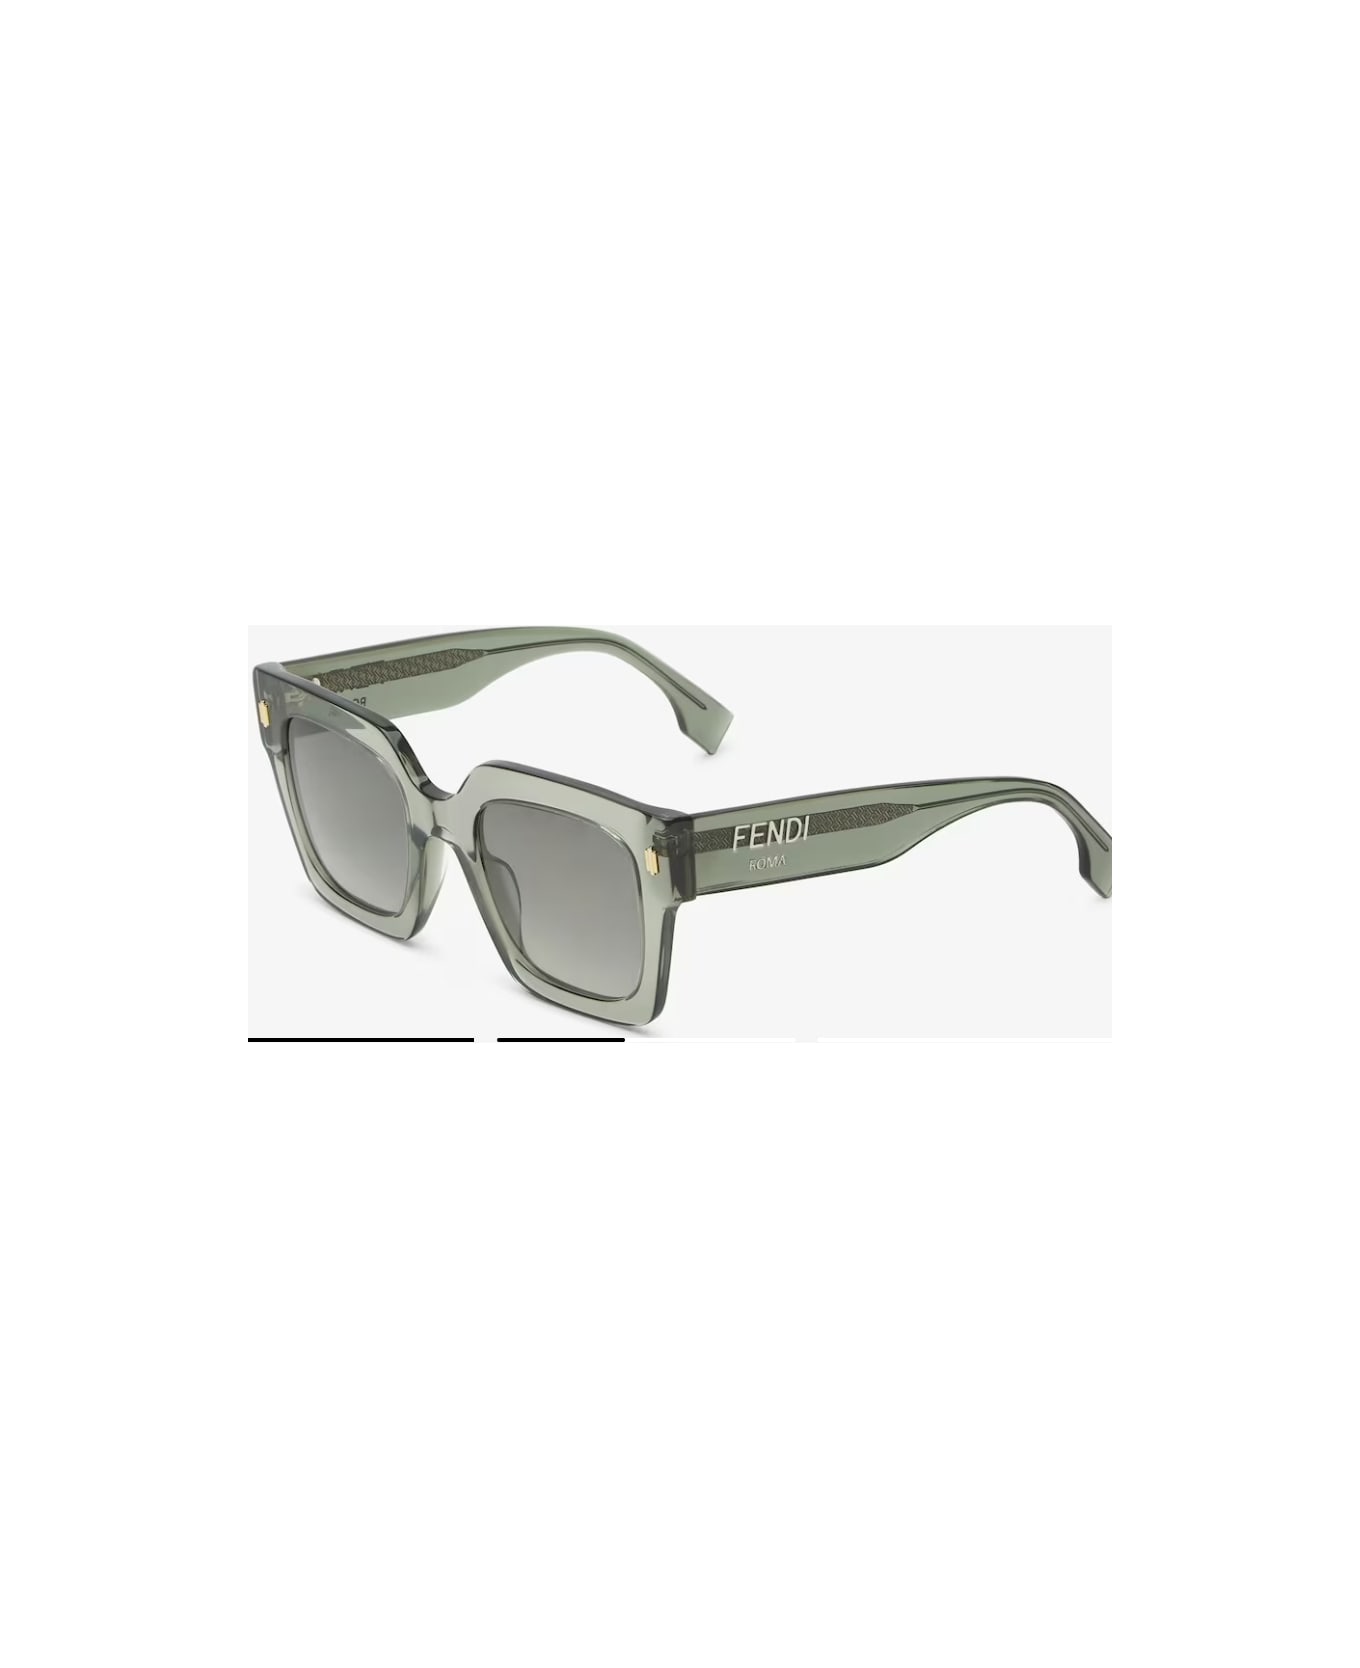 Fendi Eyewear FE40101i 20B Sunglasses - Verde サングラス